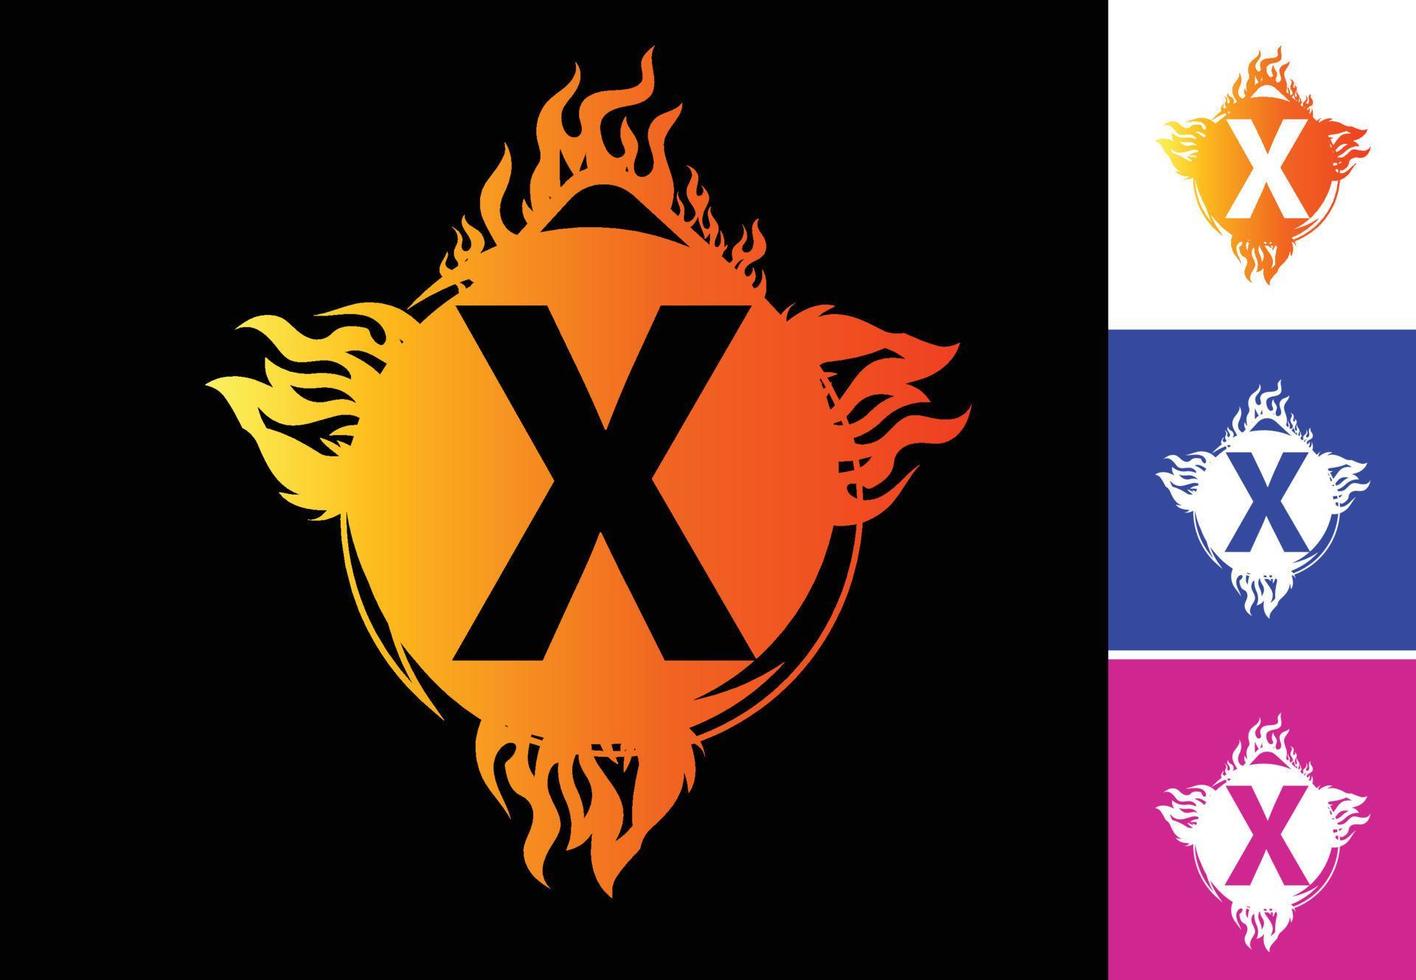 modelo de design de logotipo e ícone de fogo x carta vetor